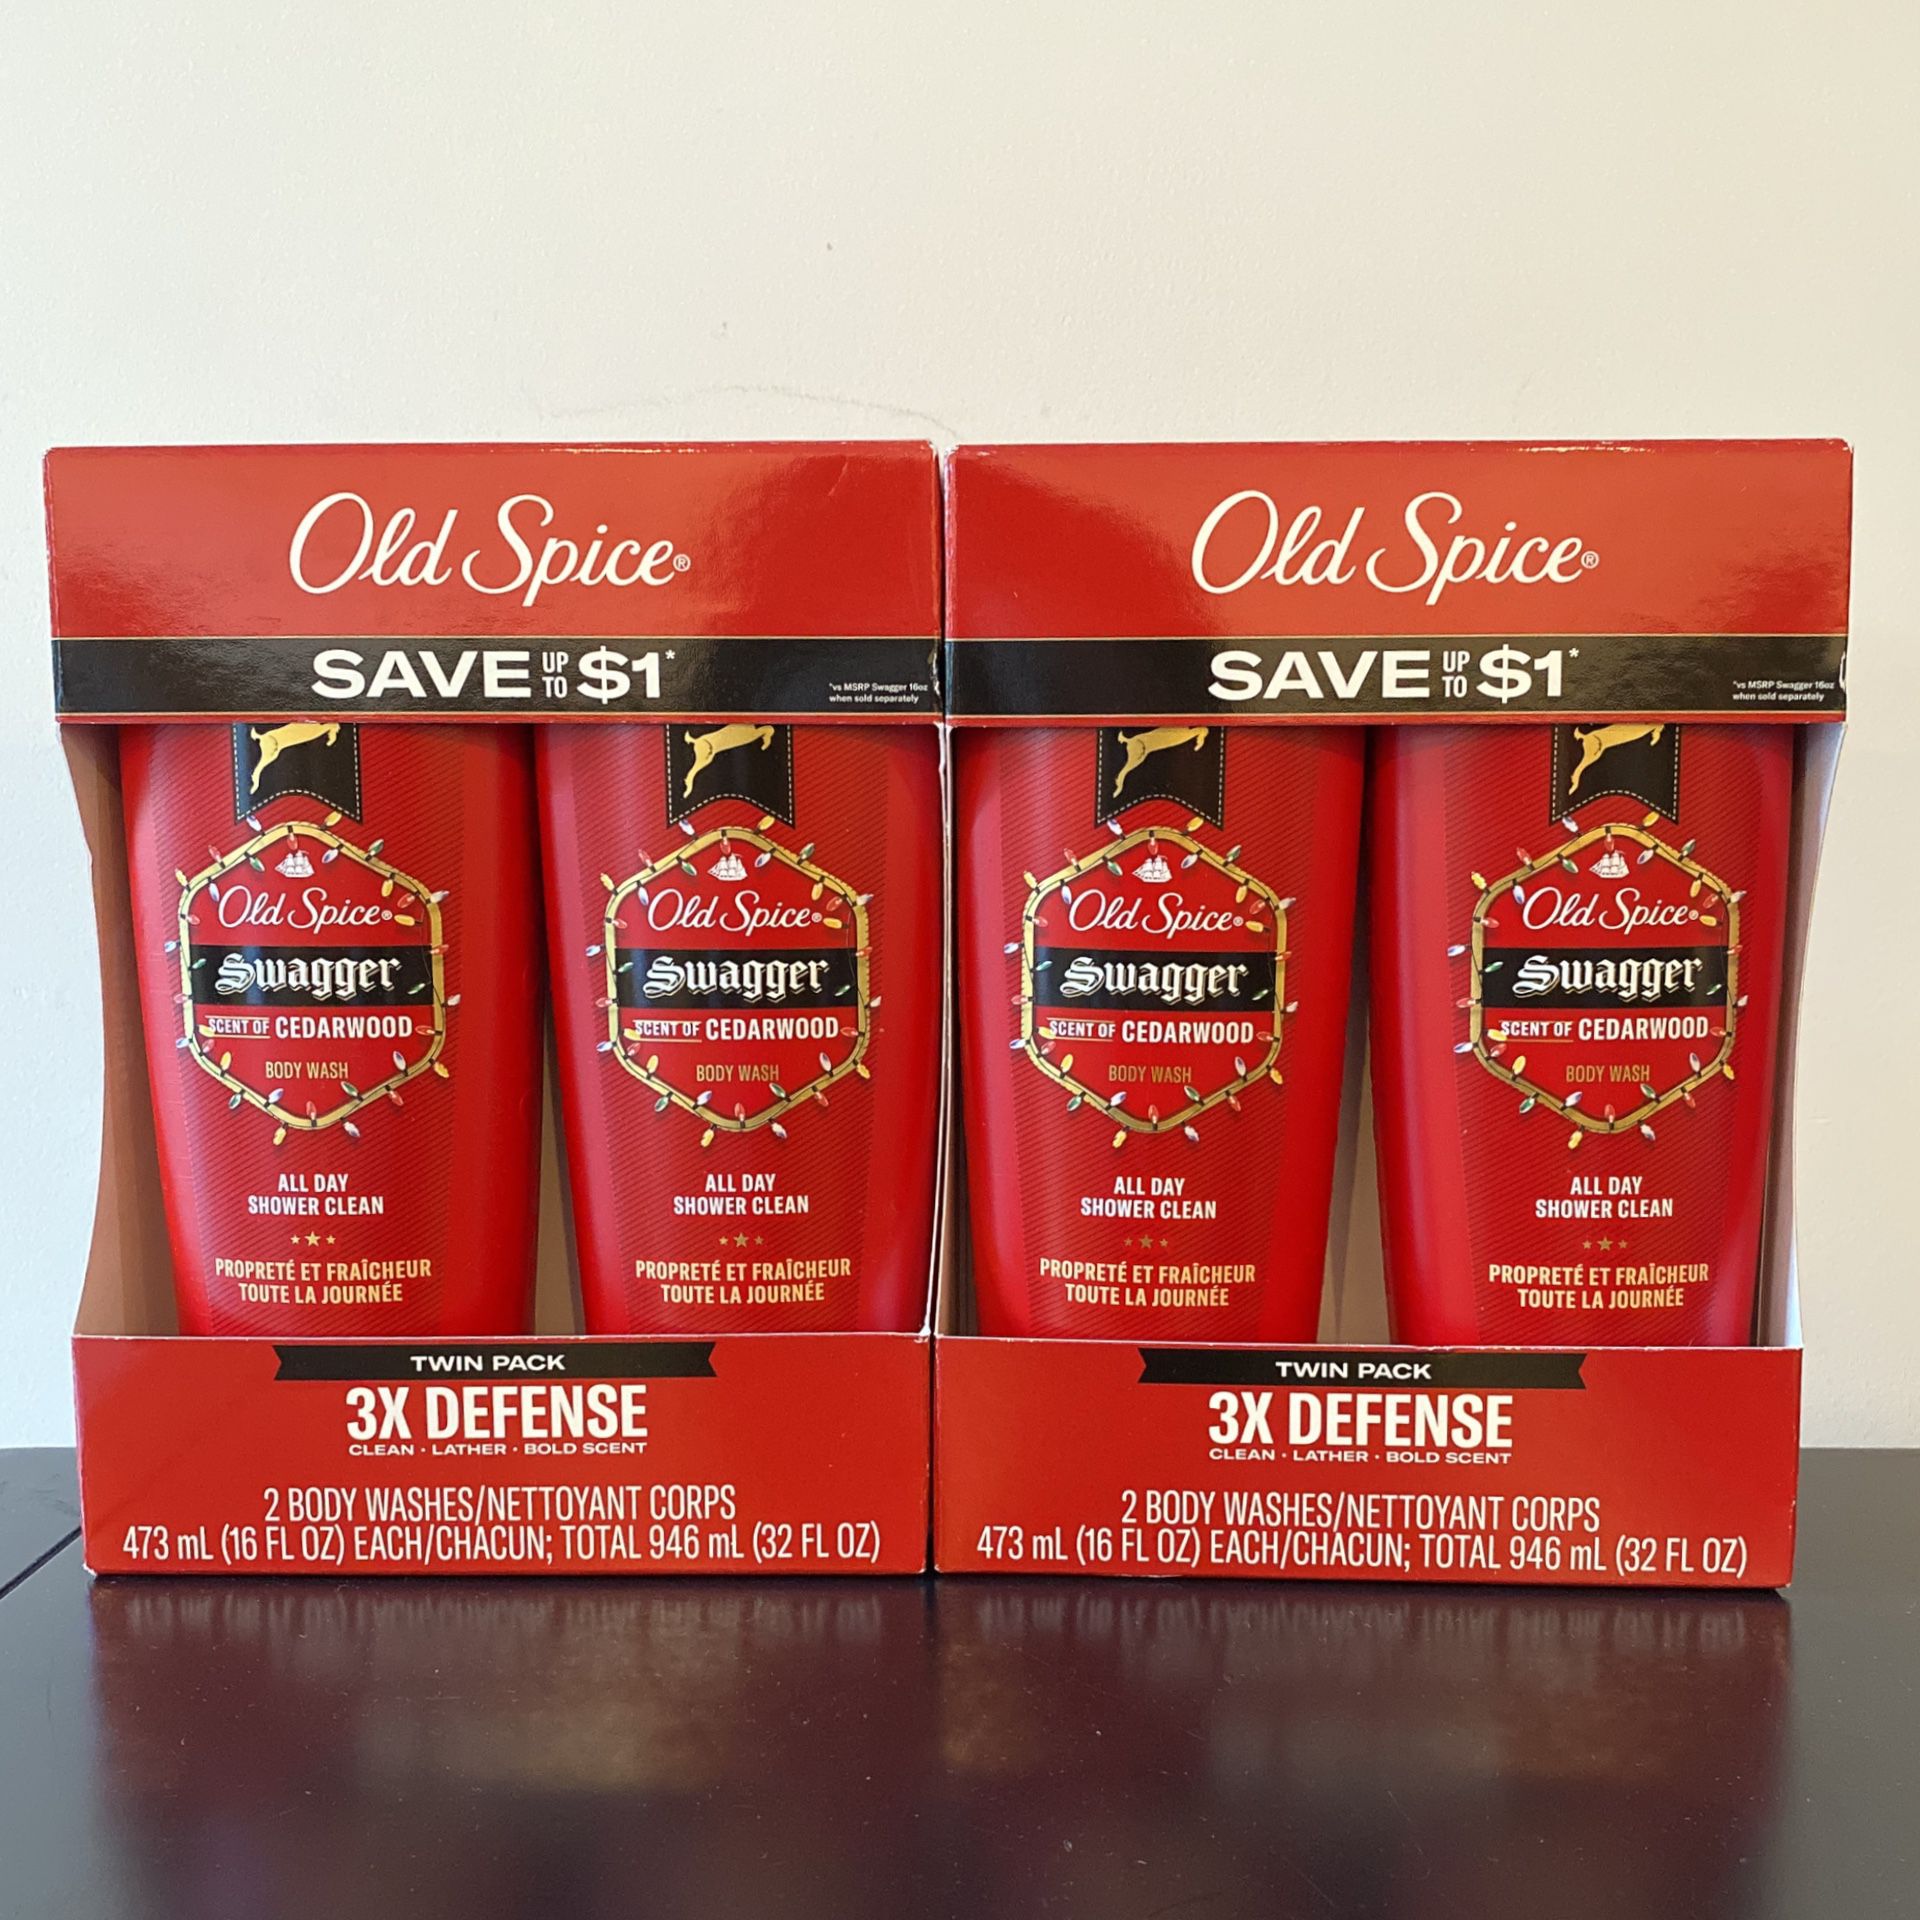 Old Spice Men’s Body Wash Gift Sets- Both for $10